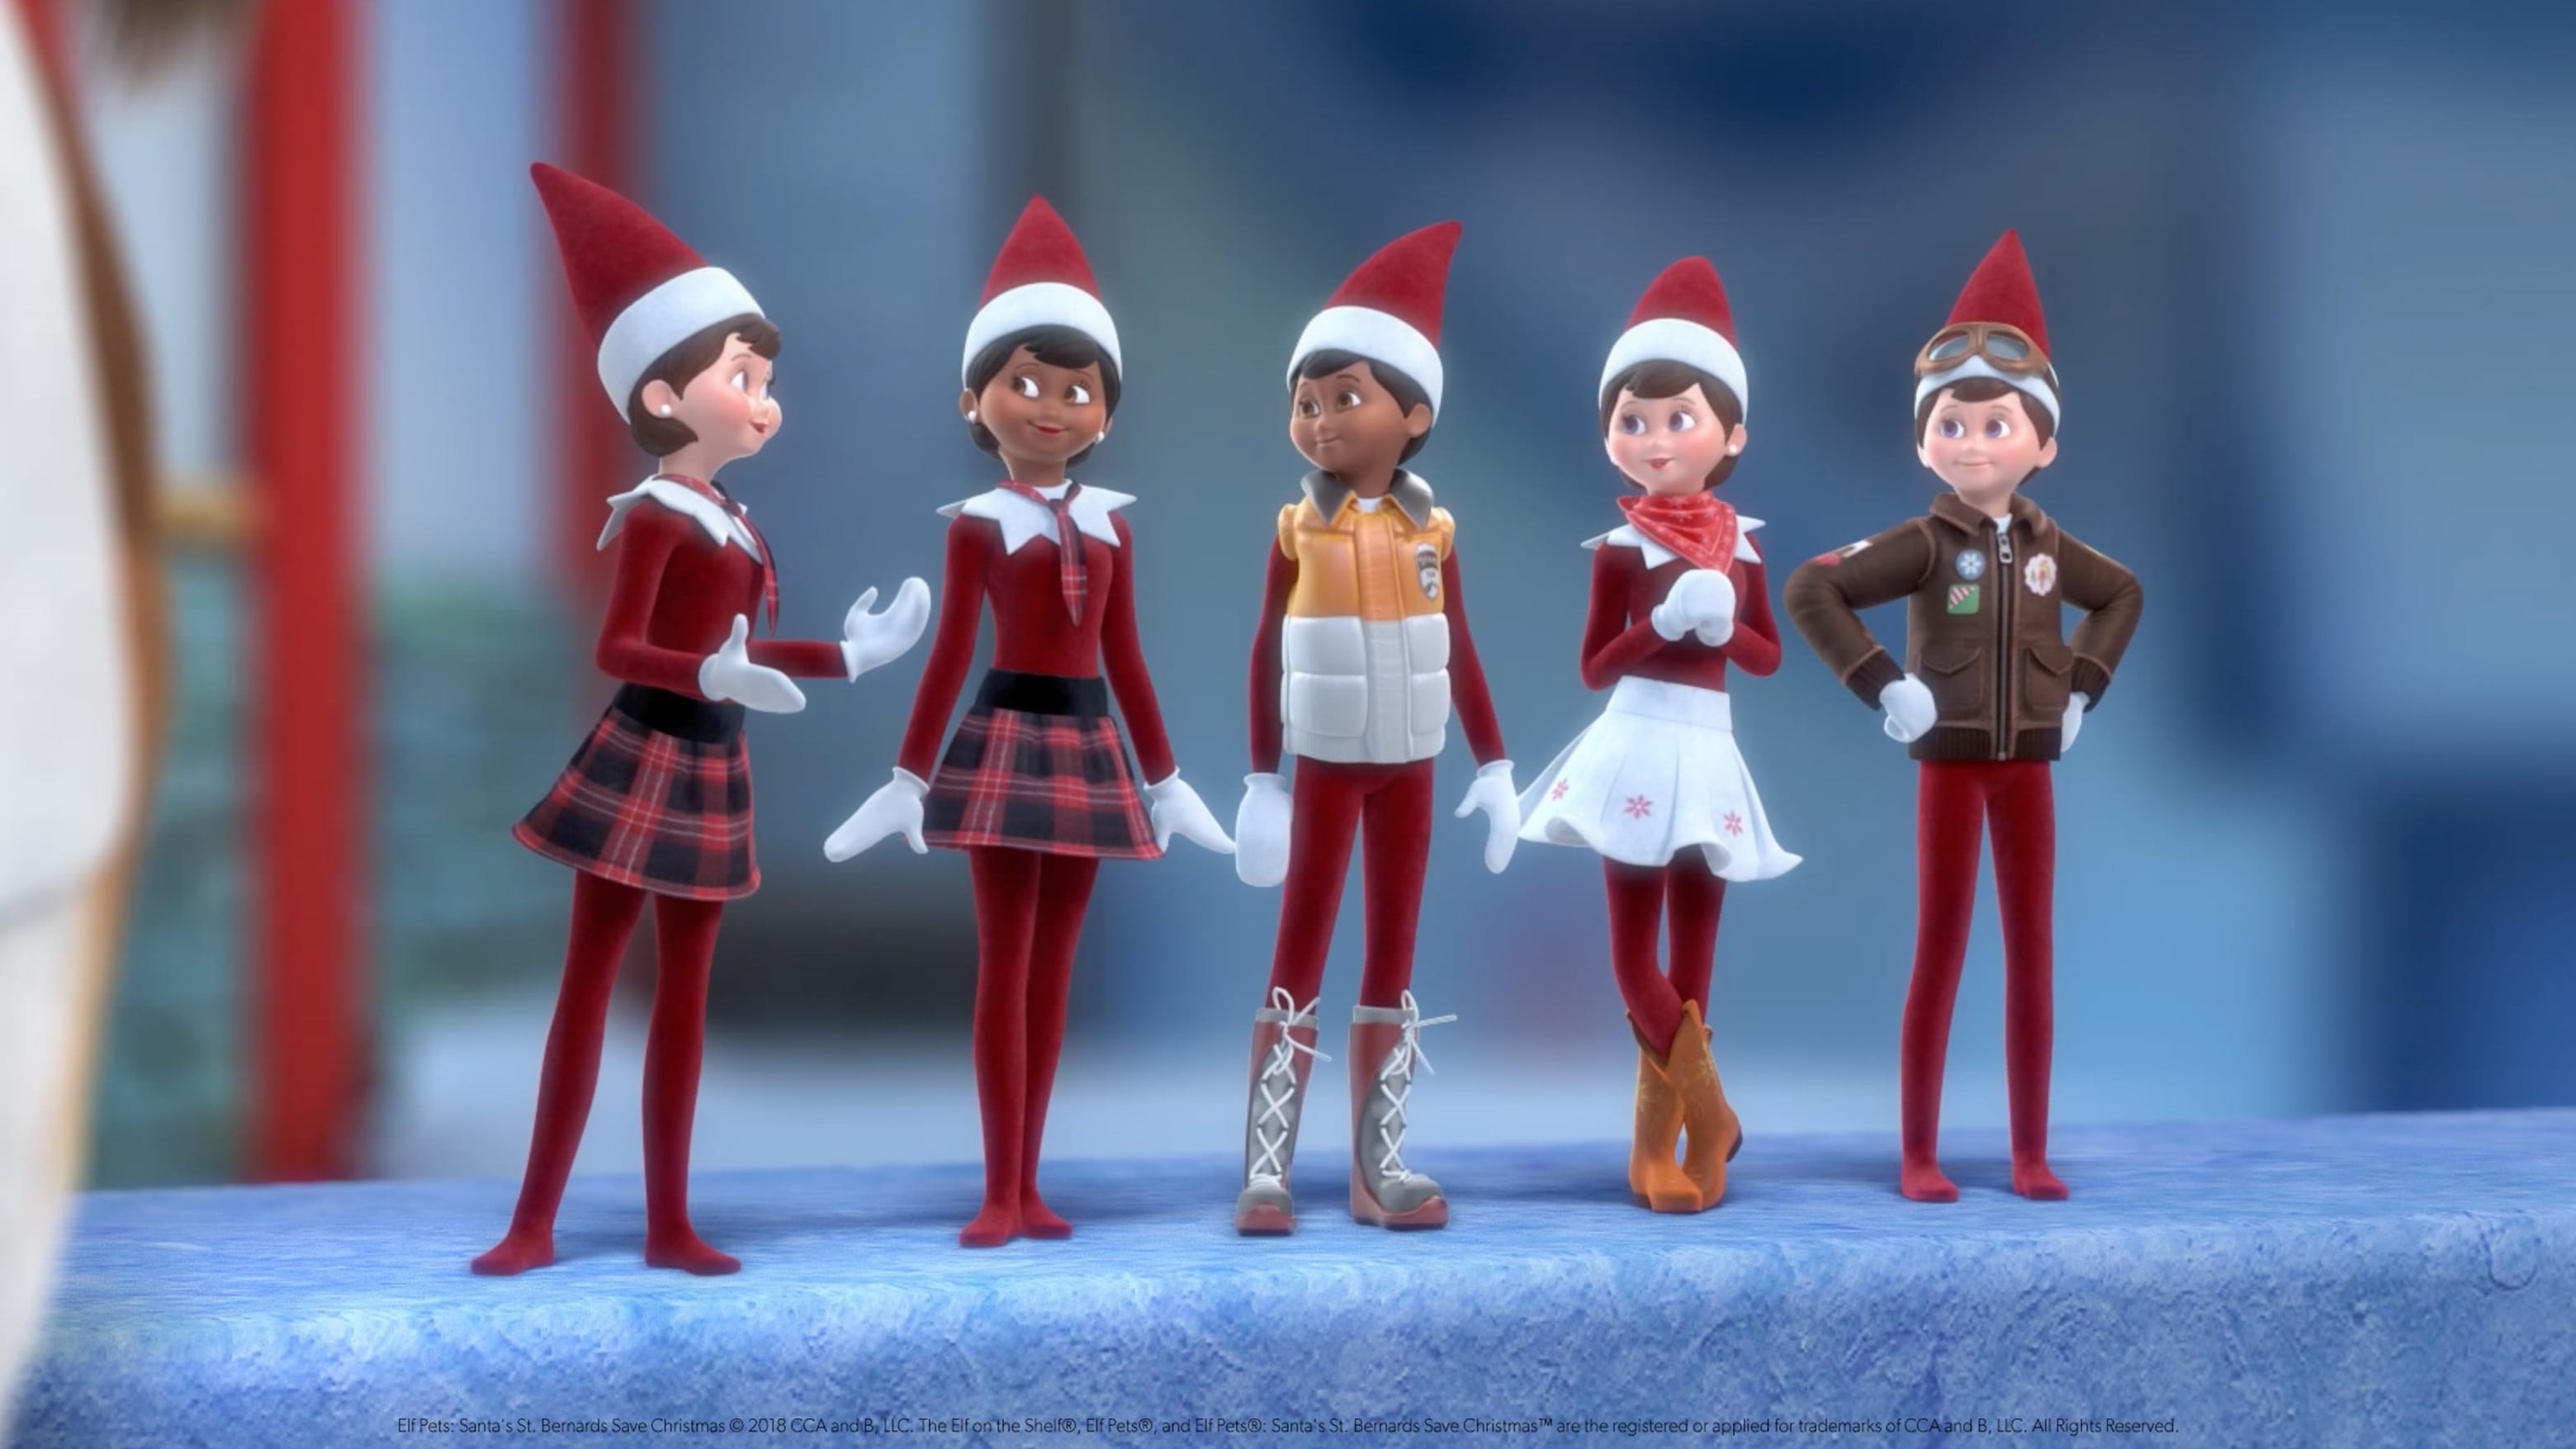 Elf Pets: Santa’s St. Bernards Save Christmas